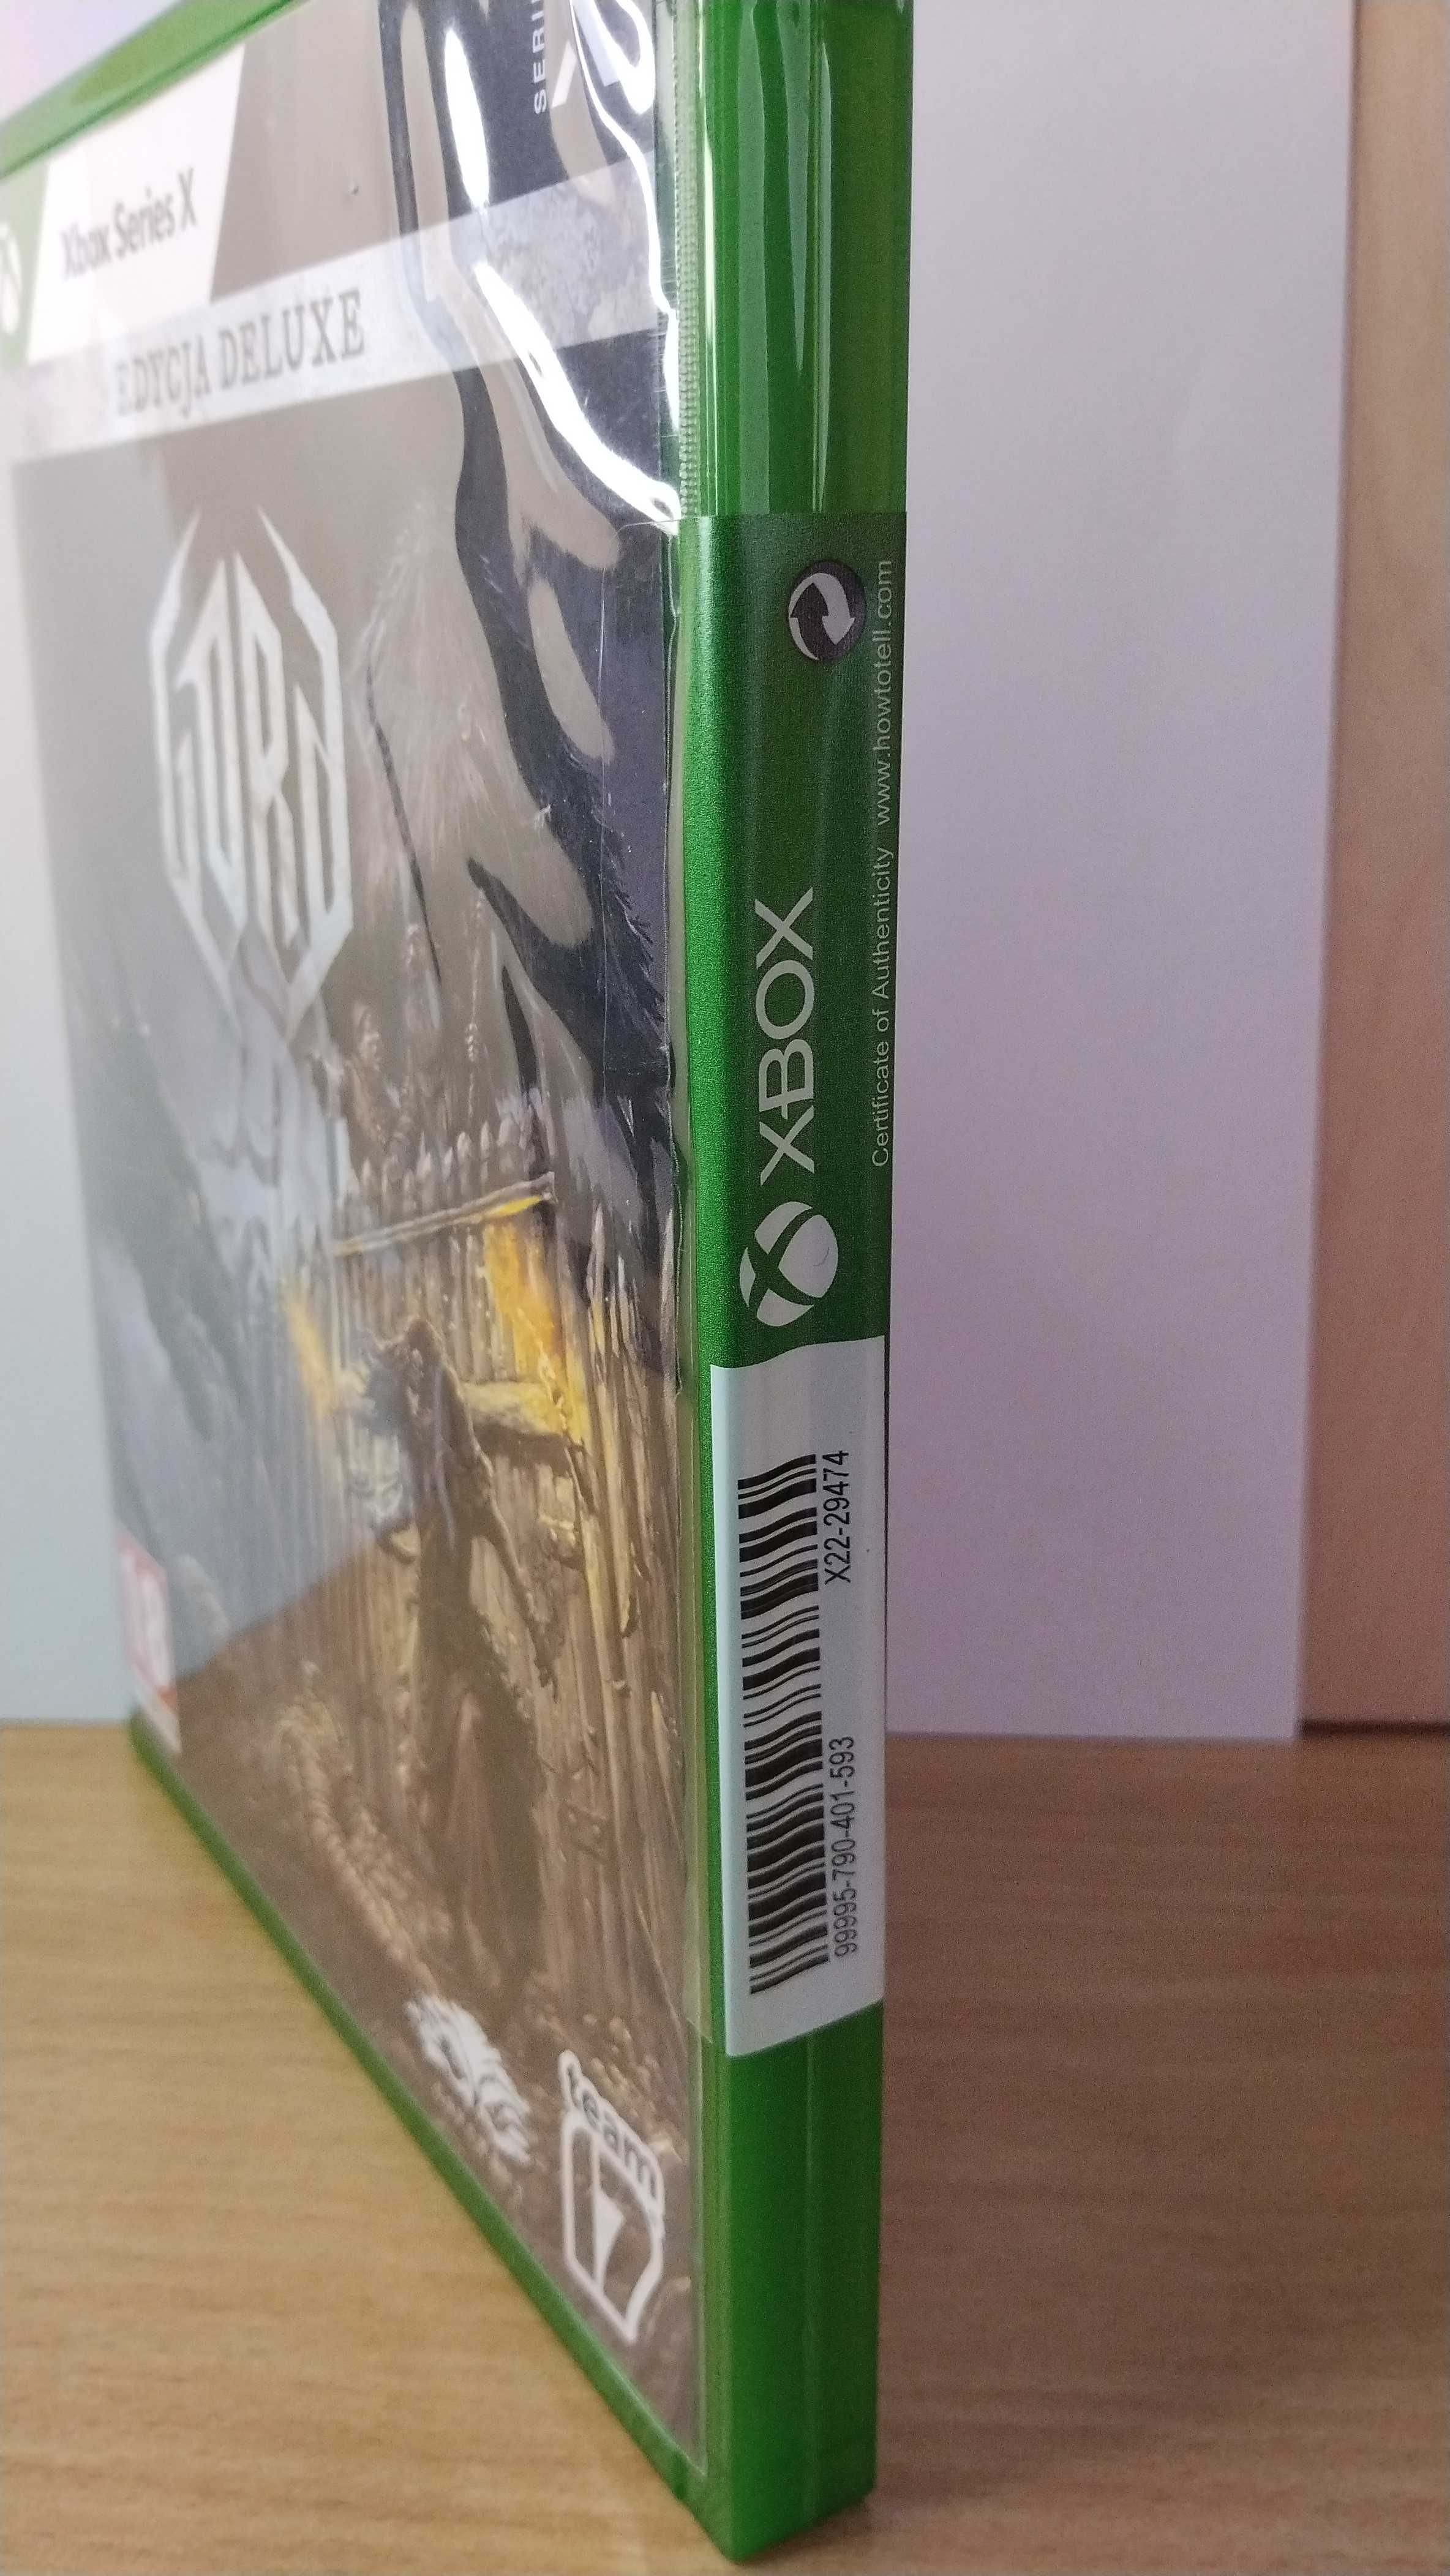 Gord - Edycja Deluxe - Xbox Series X.